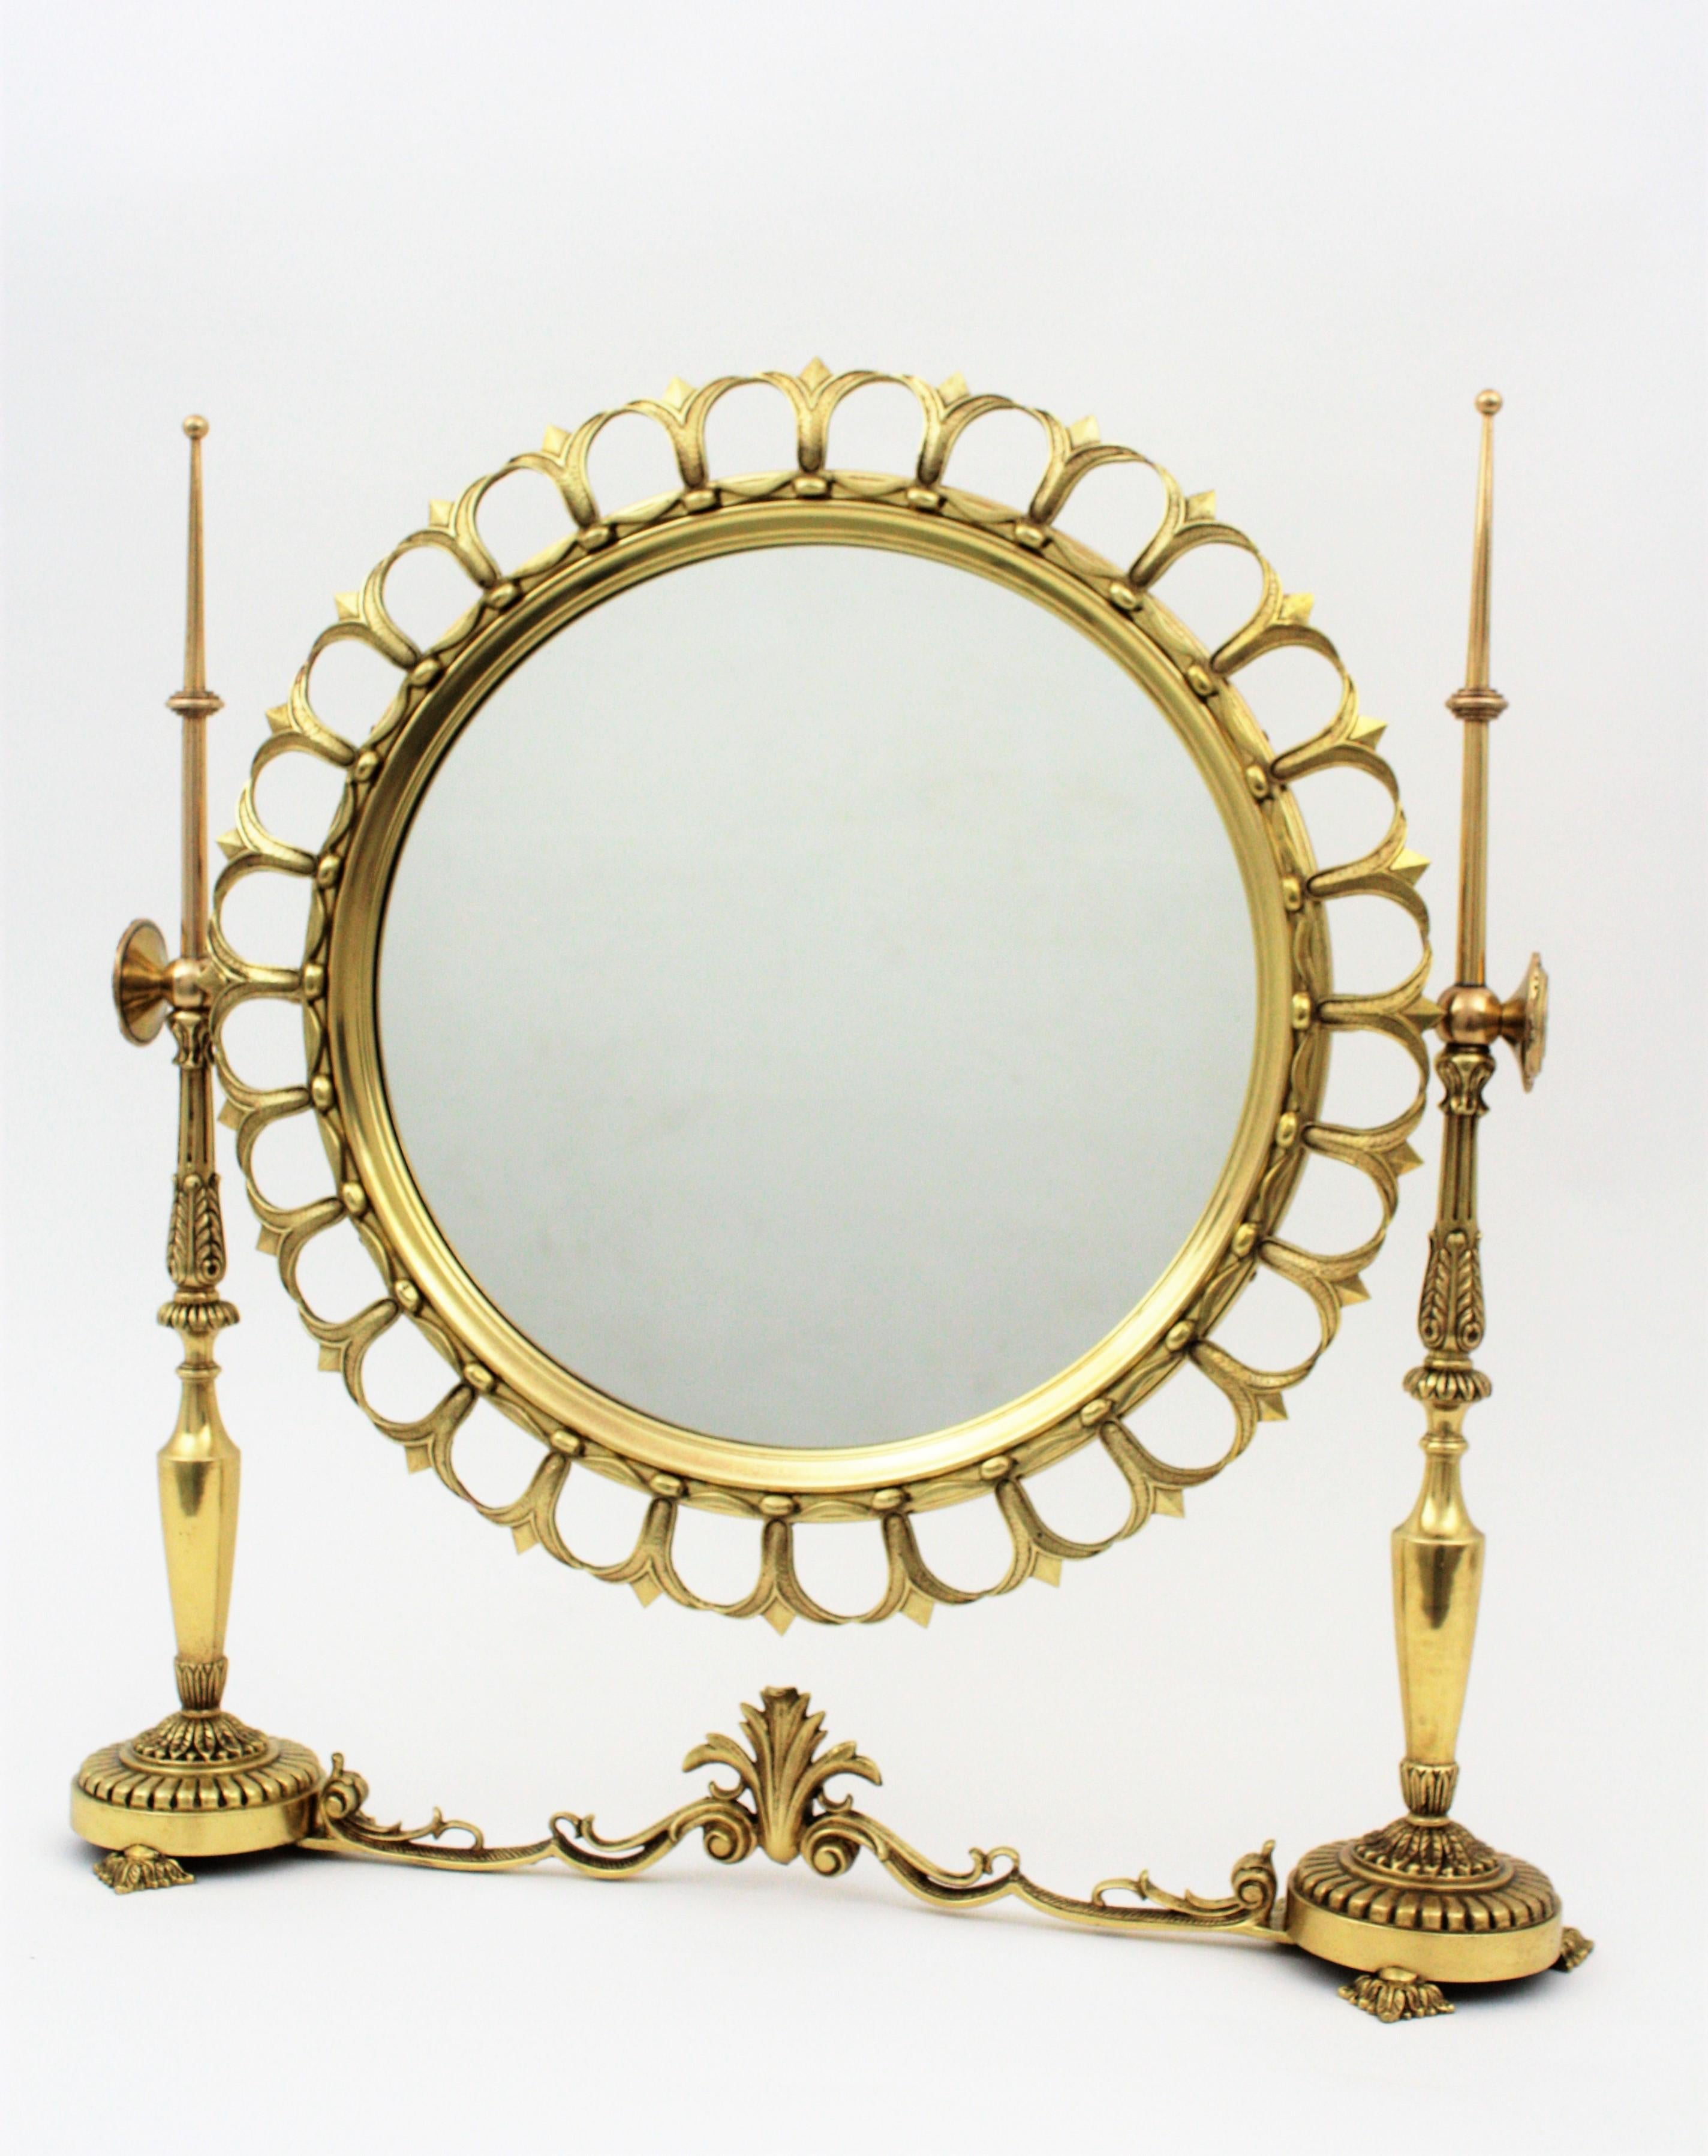 Spanish Neoclassical Sunburst Vanity or Table Mirror in Brass For Sale